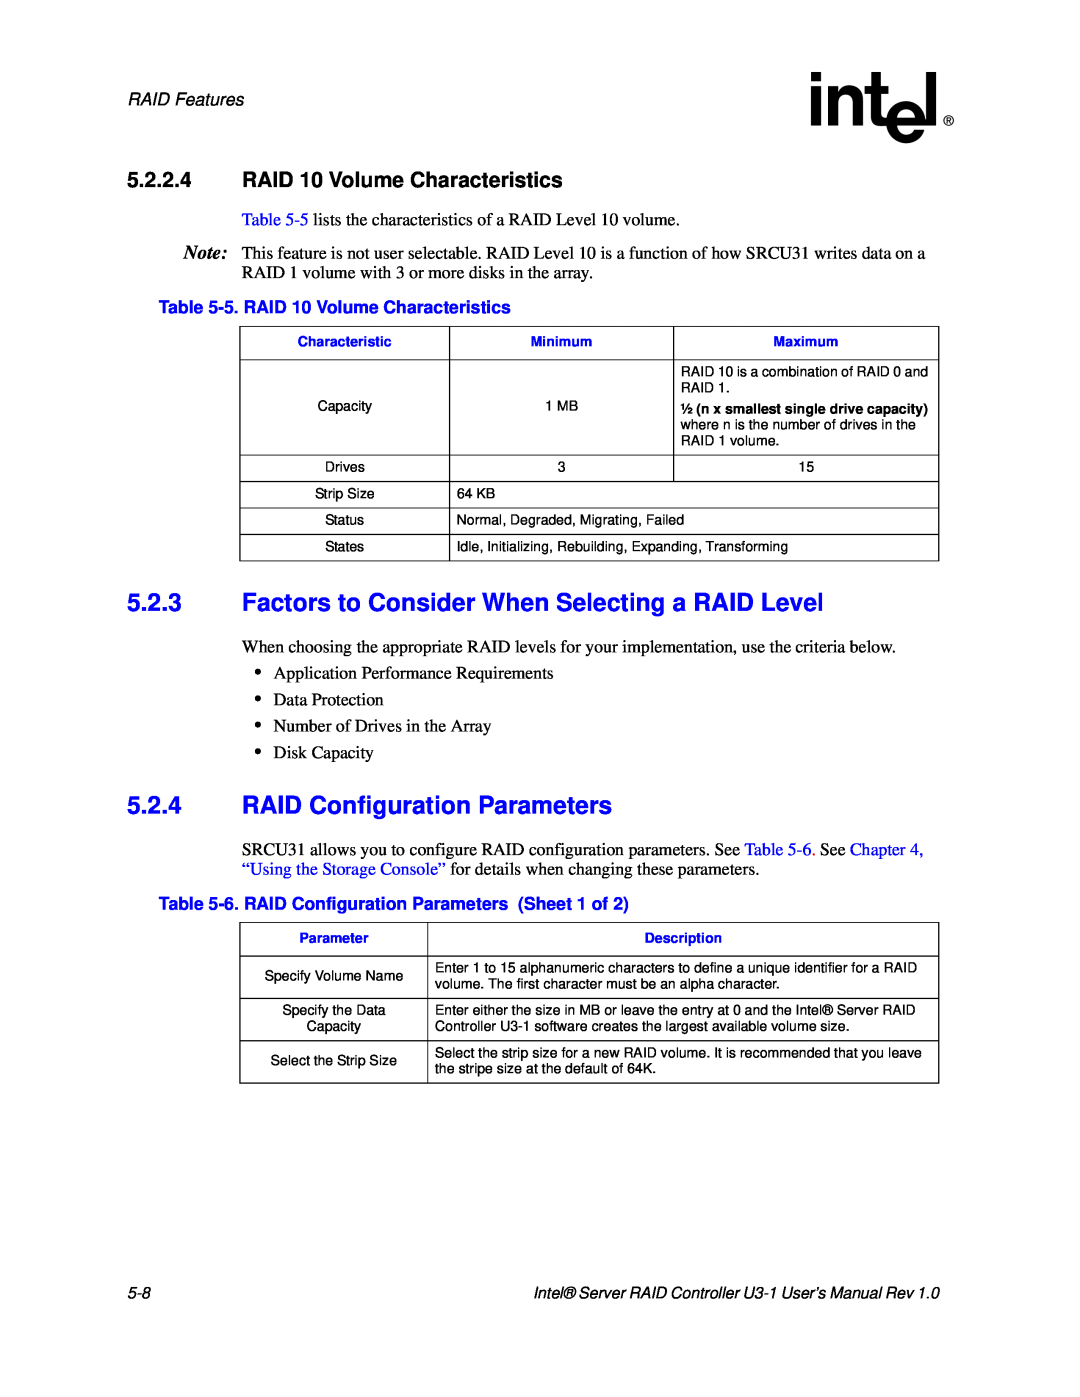 Intel SRCU31 user manual 5.2.4RAID Configuration Parameters, 5.2.2.4RAID 10 Volume Characteristics, RAID Features 